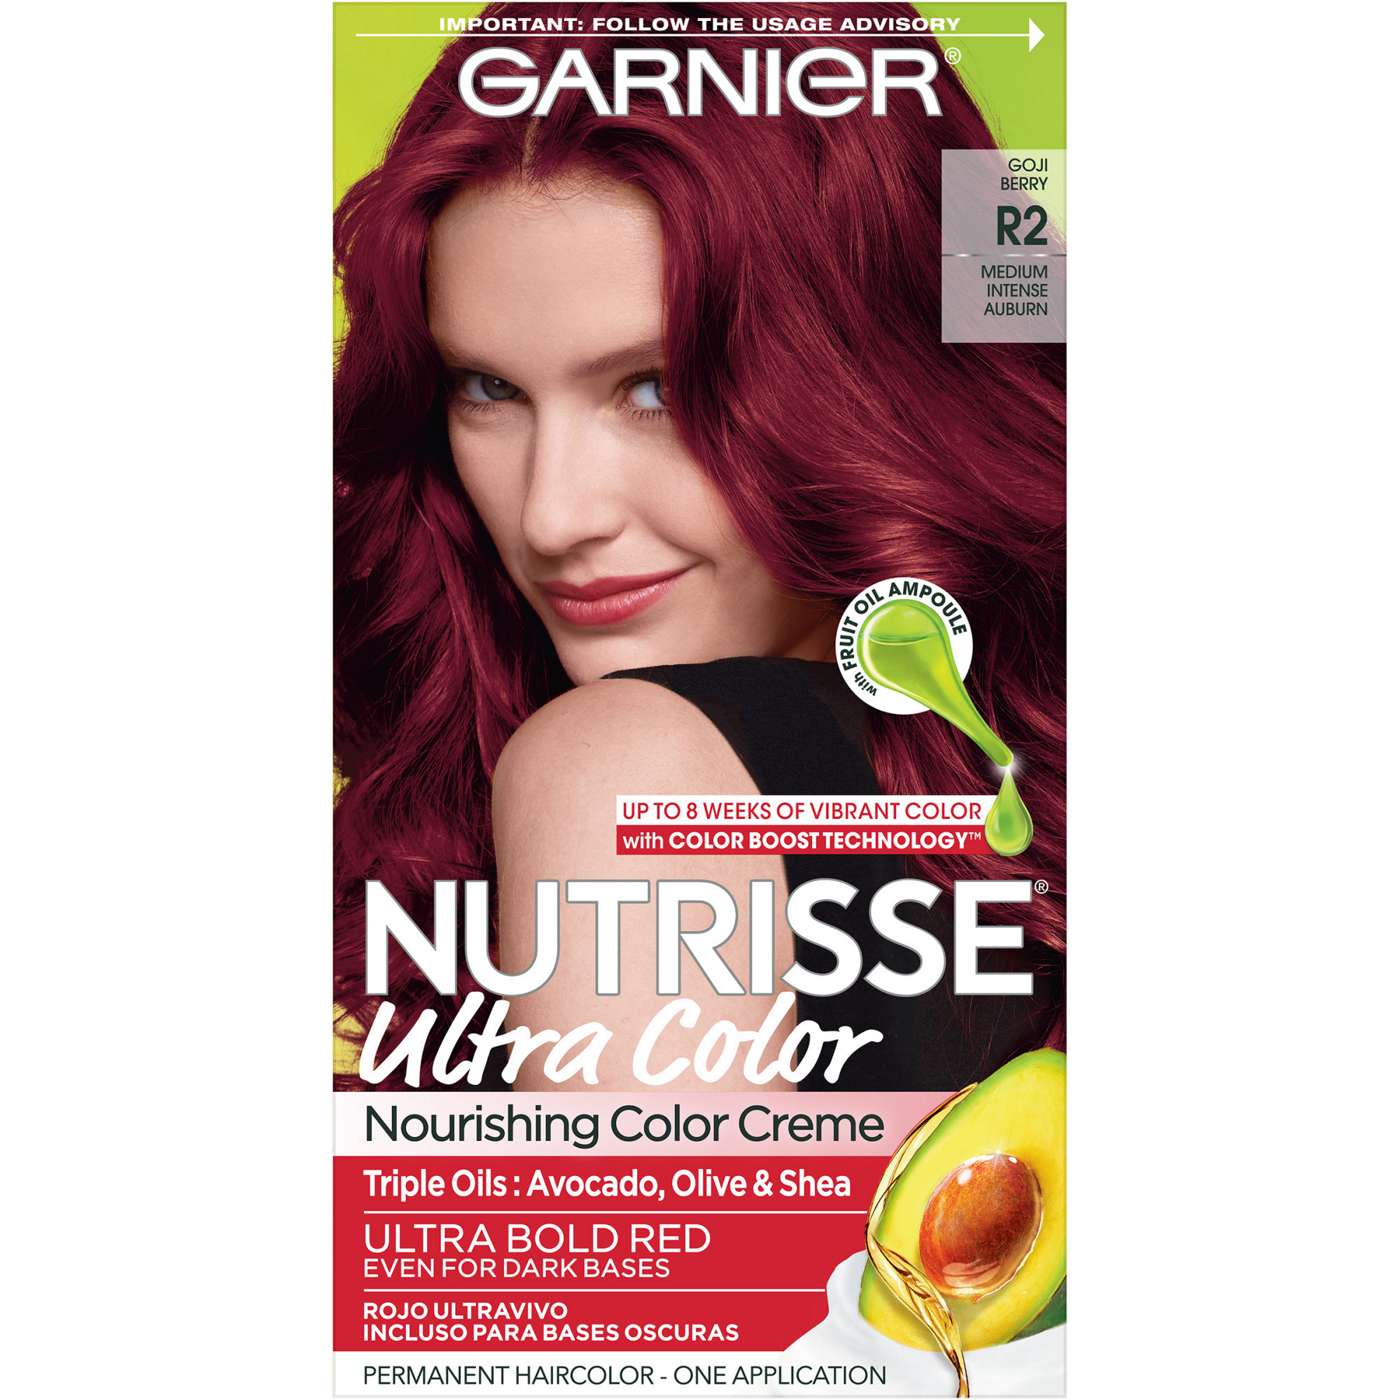 Garnier Nutrisse Ultra Color Nourishing Bold Permanent Hair Color Creme R2 Medium Intense Auburn; image 1 of 9